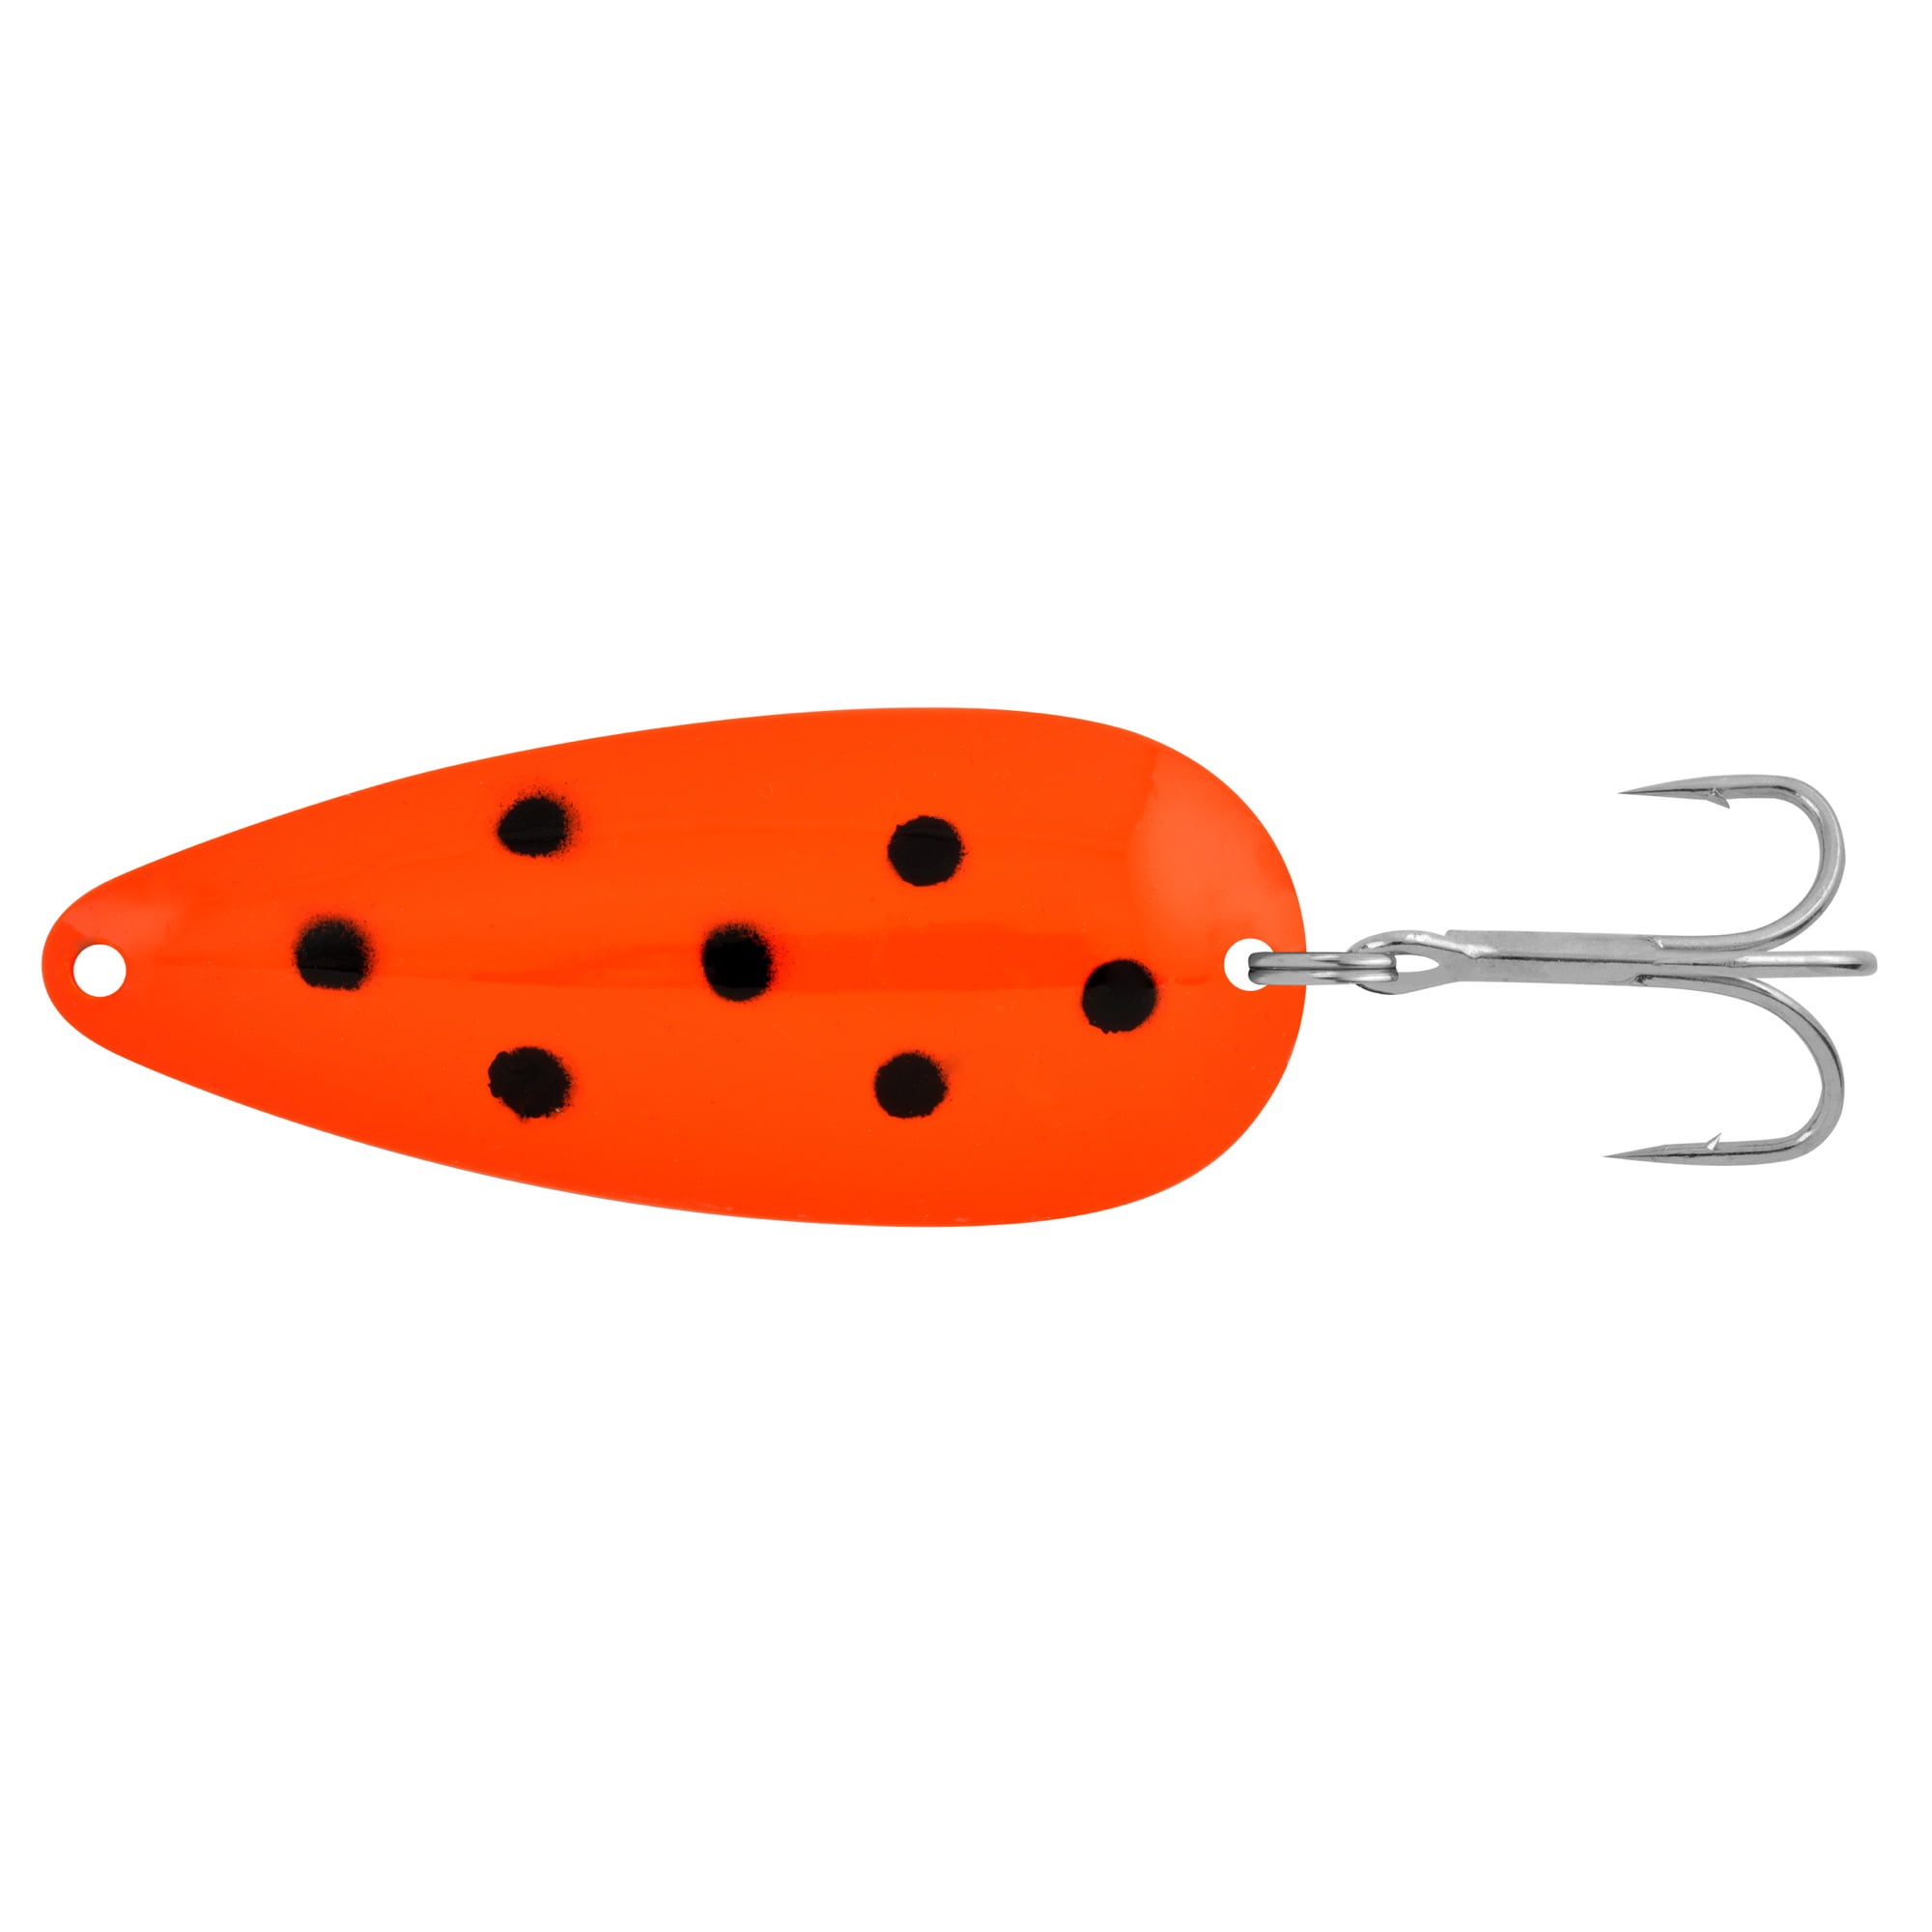 6pcs Treble Hook Fishing Accessory Fishing Spoon Lure Bass Bait